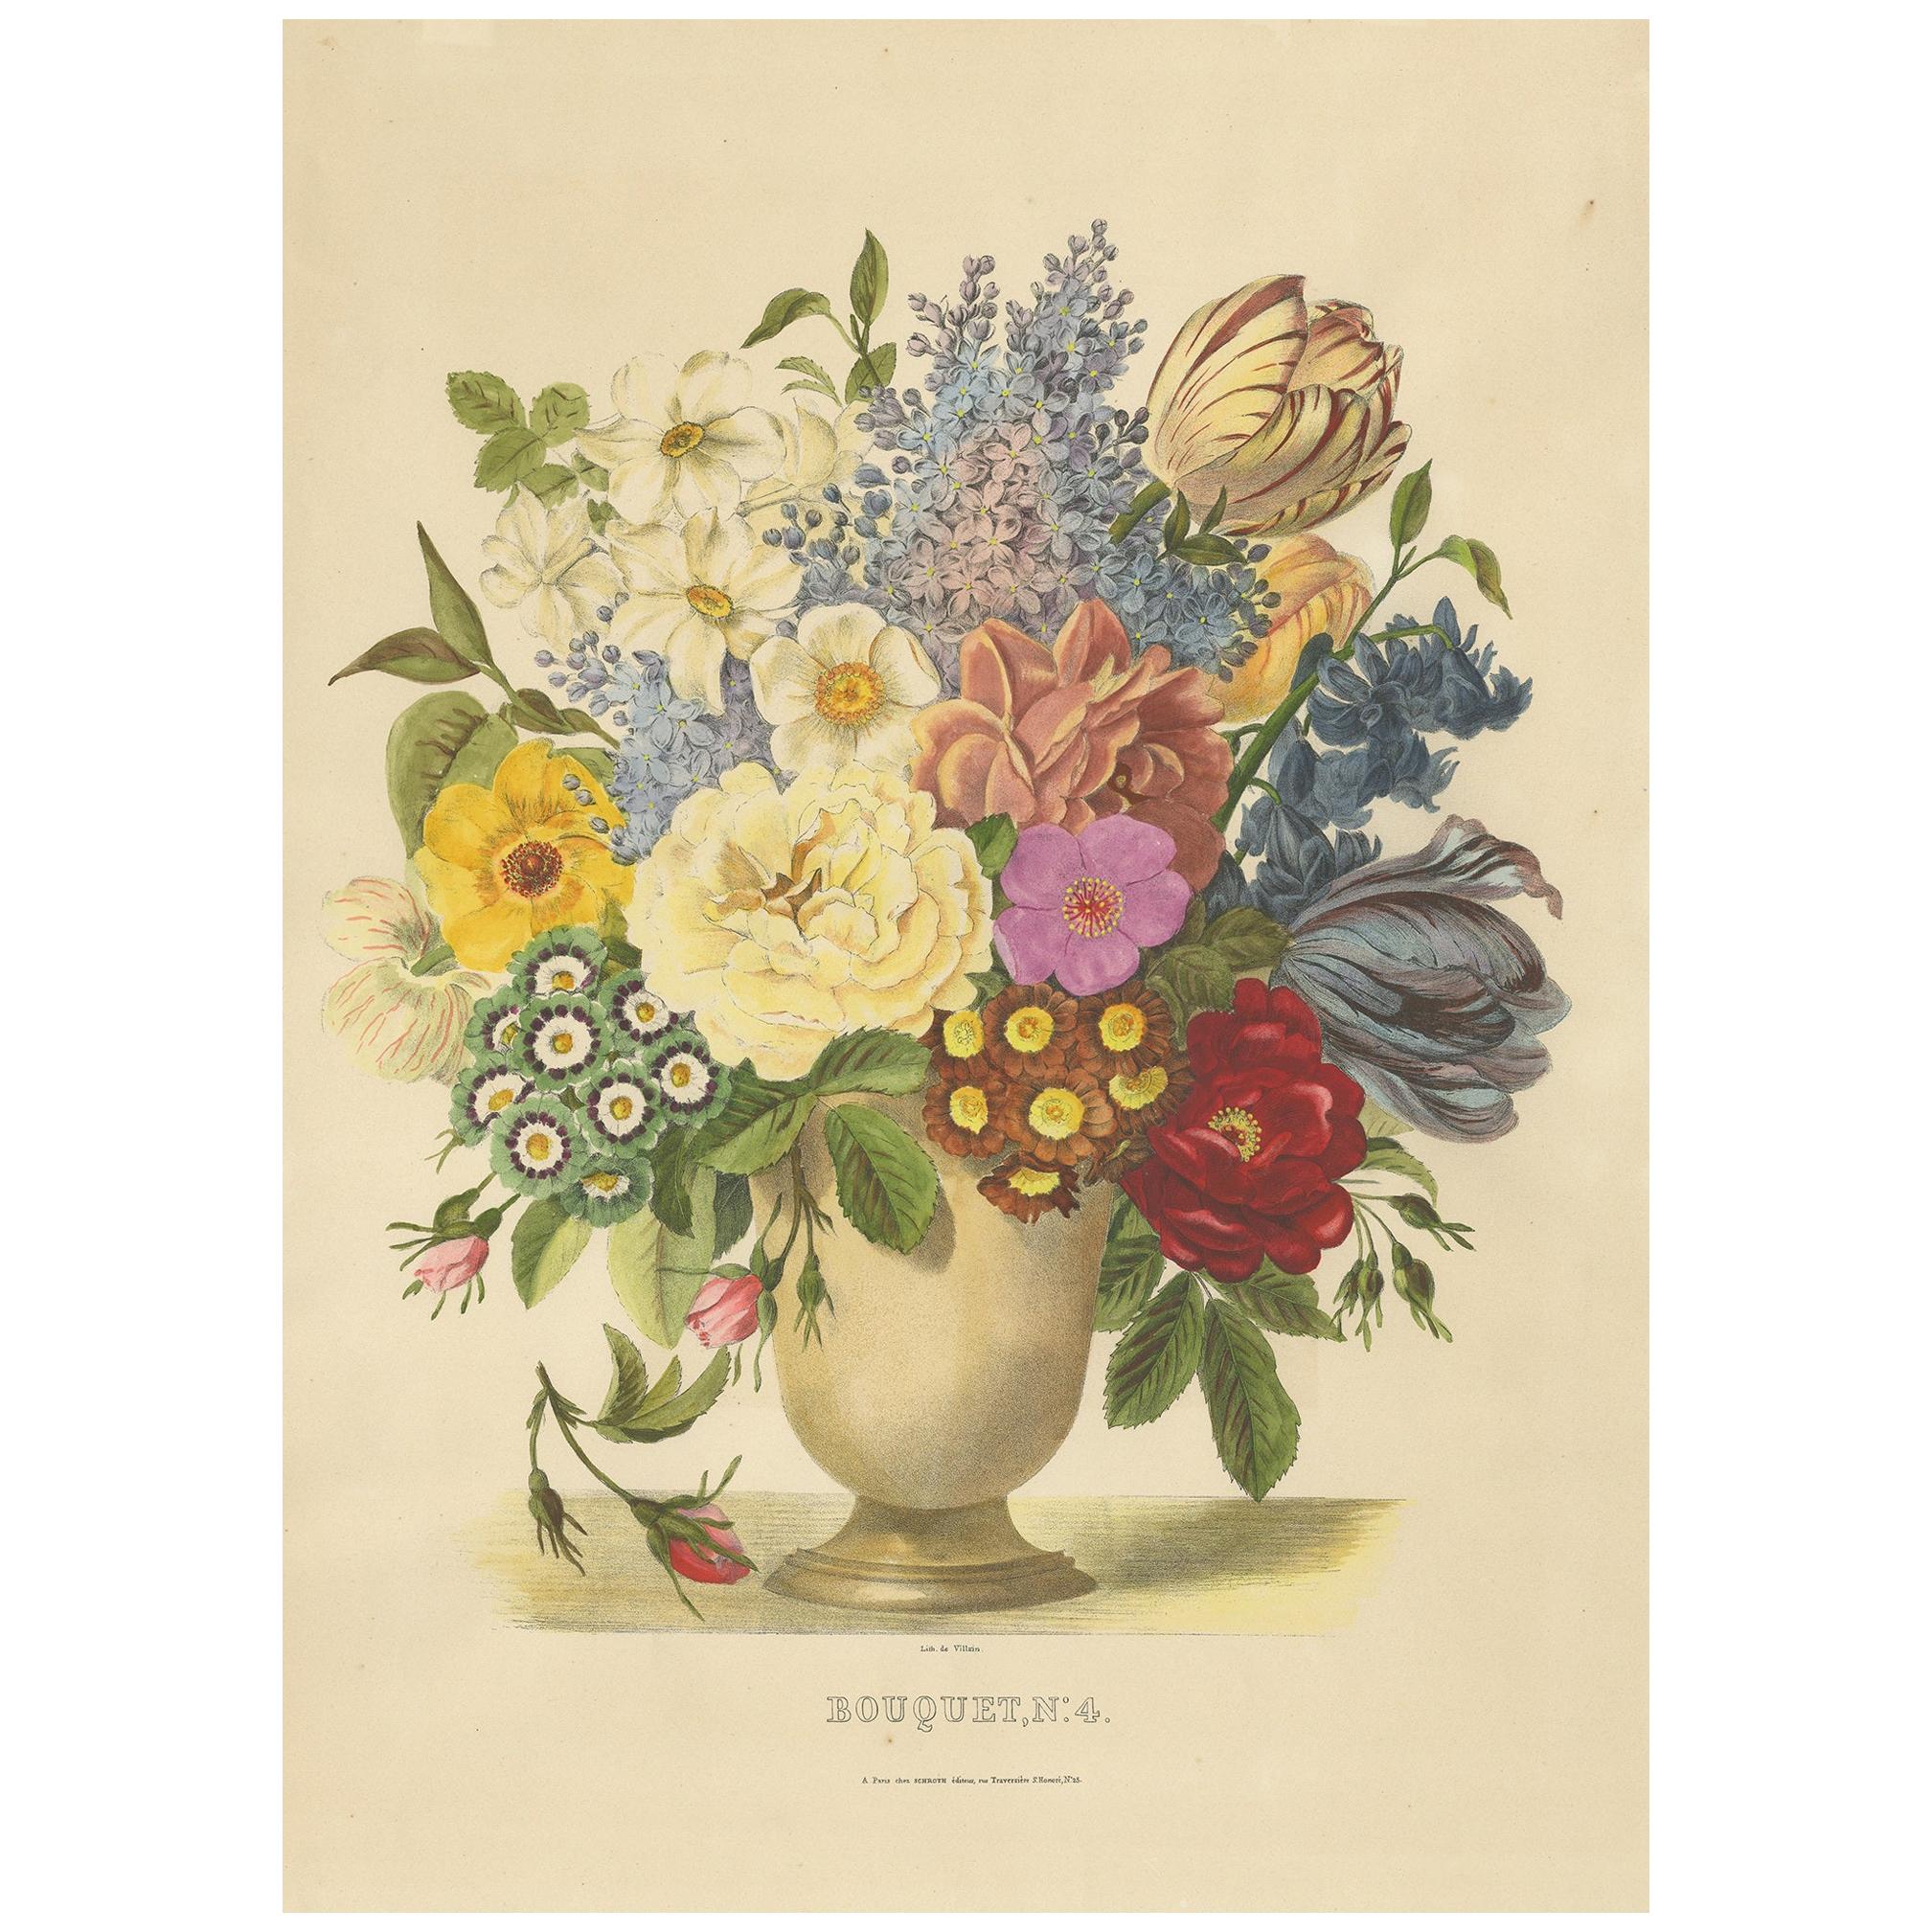 Antique Print of a Flower Bouquet by Villain, circa 1850